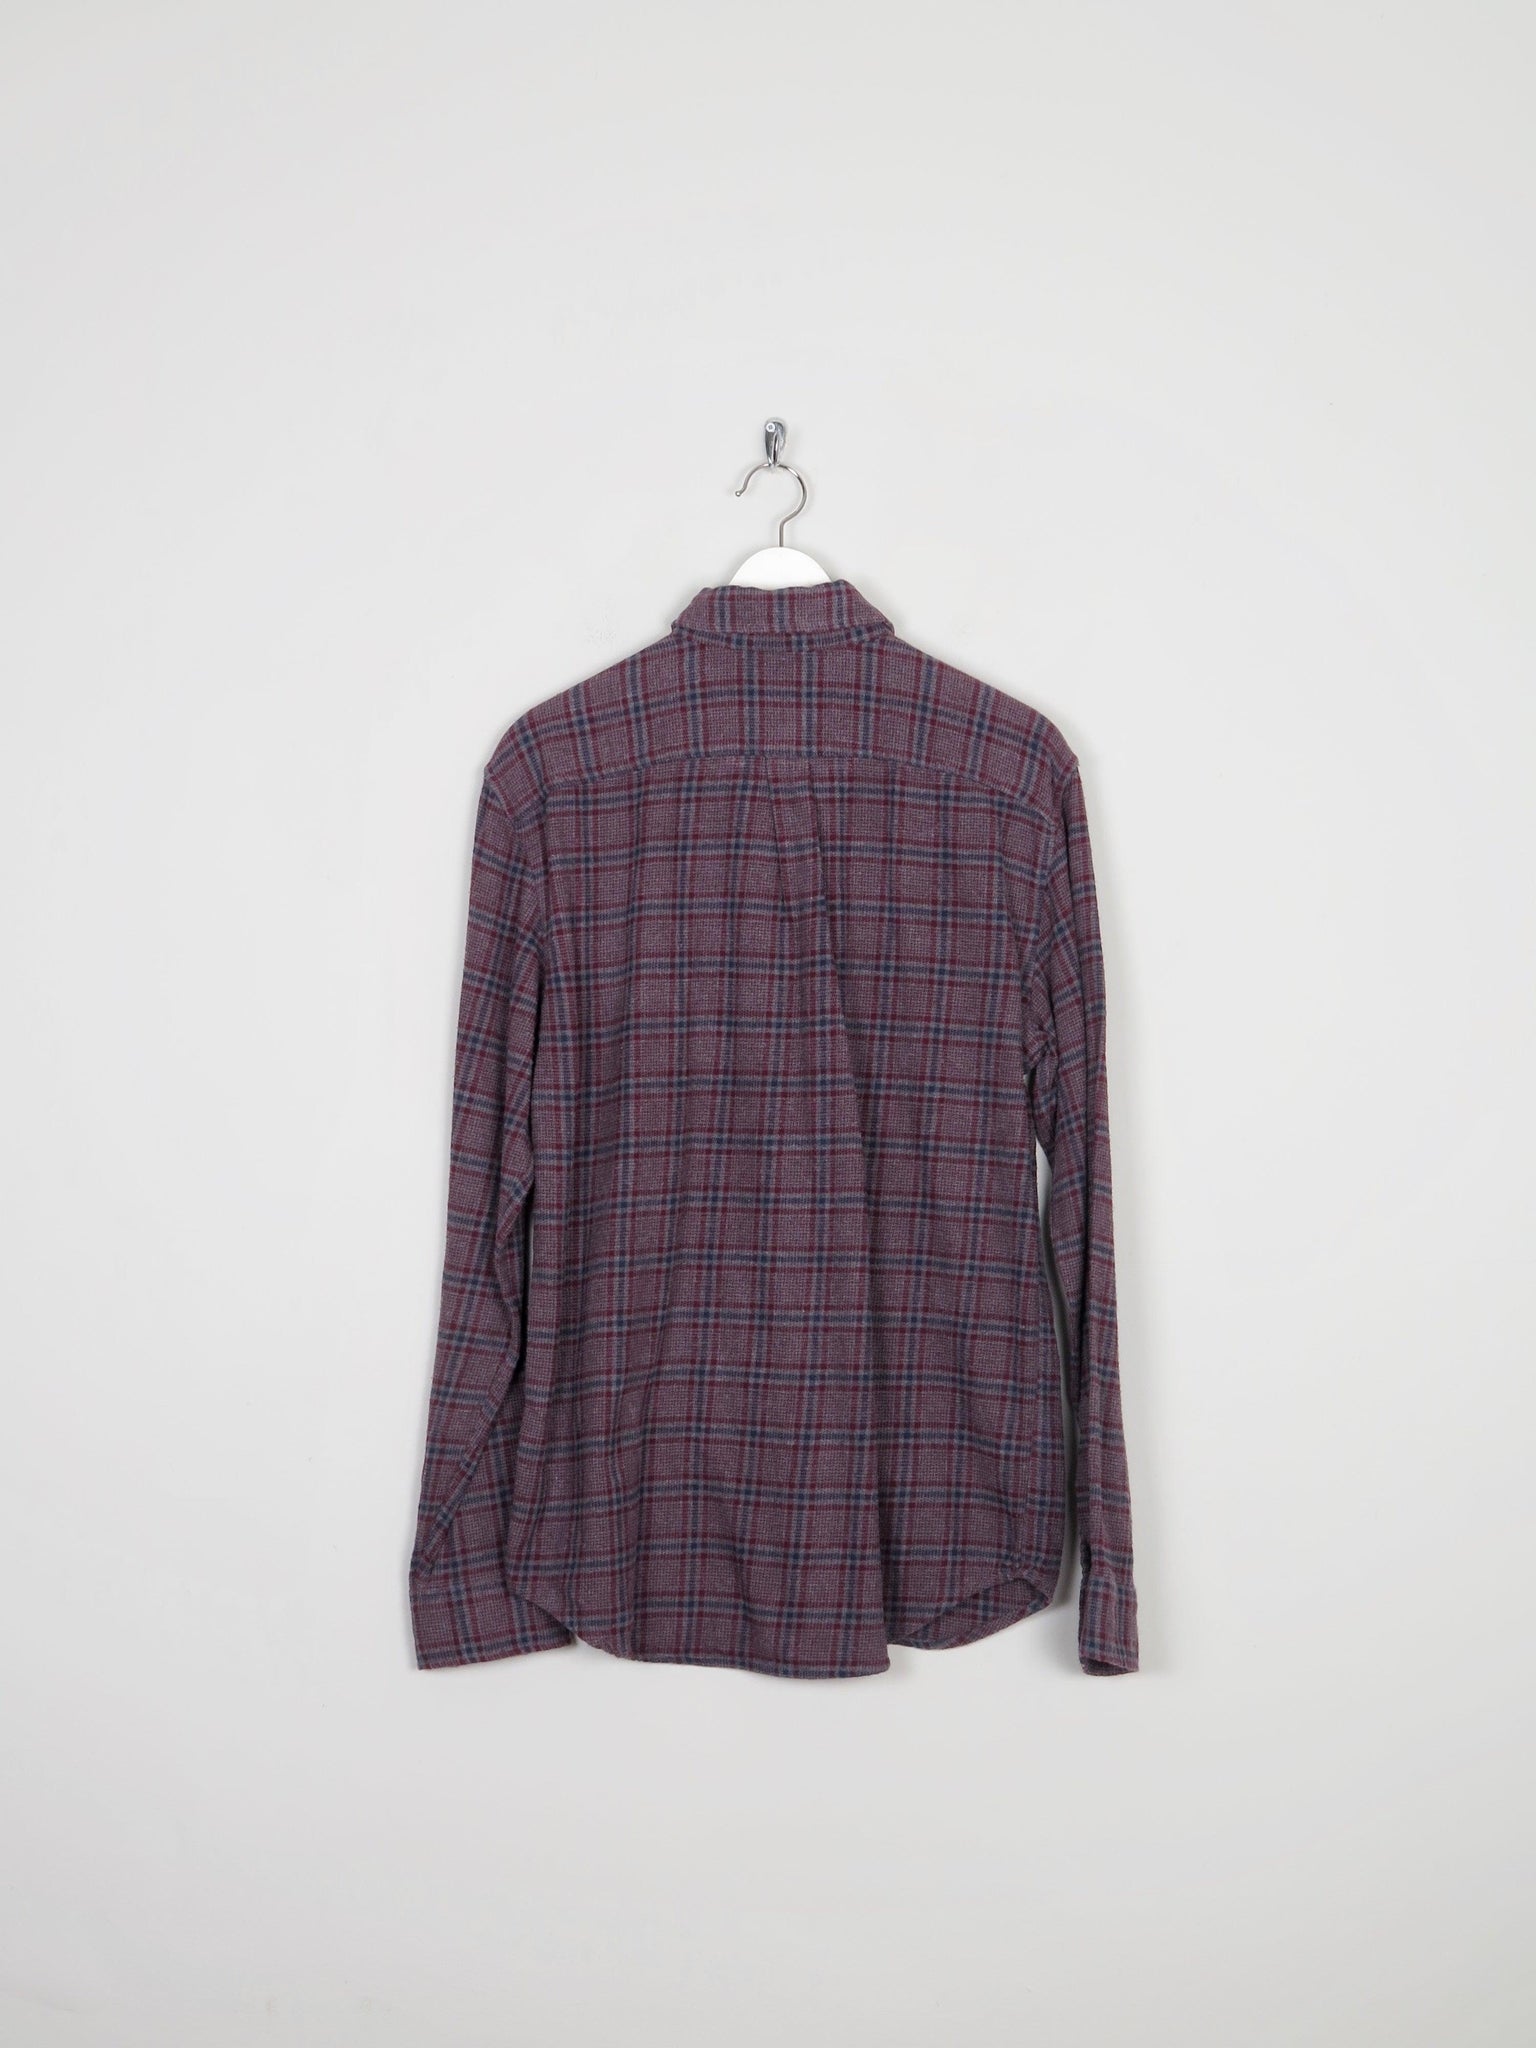 Men's Wine Classic Flannel Gap Shirt M - The Harlequin